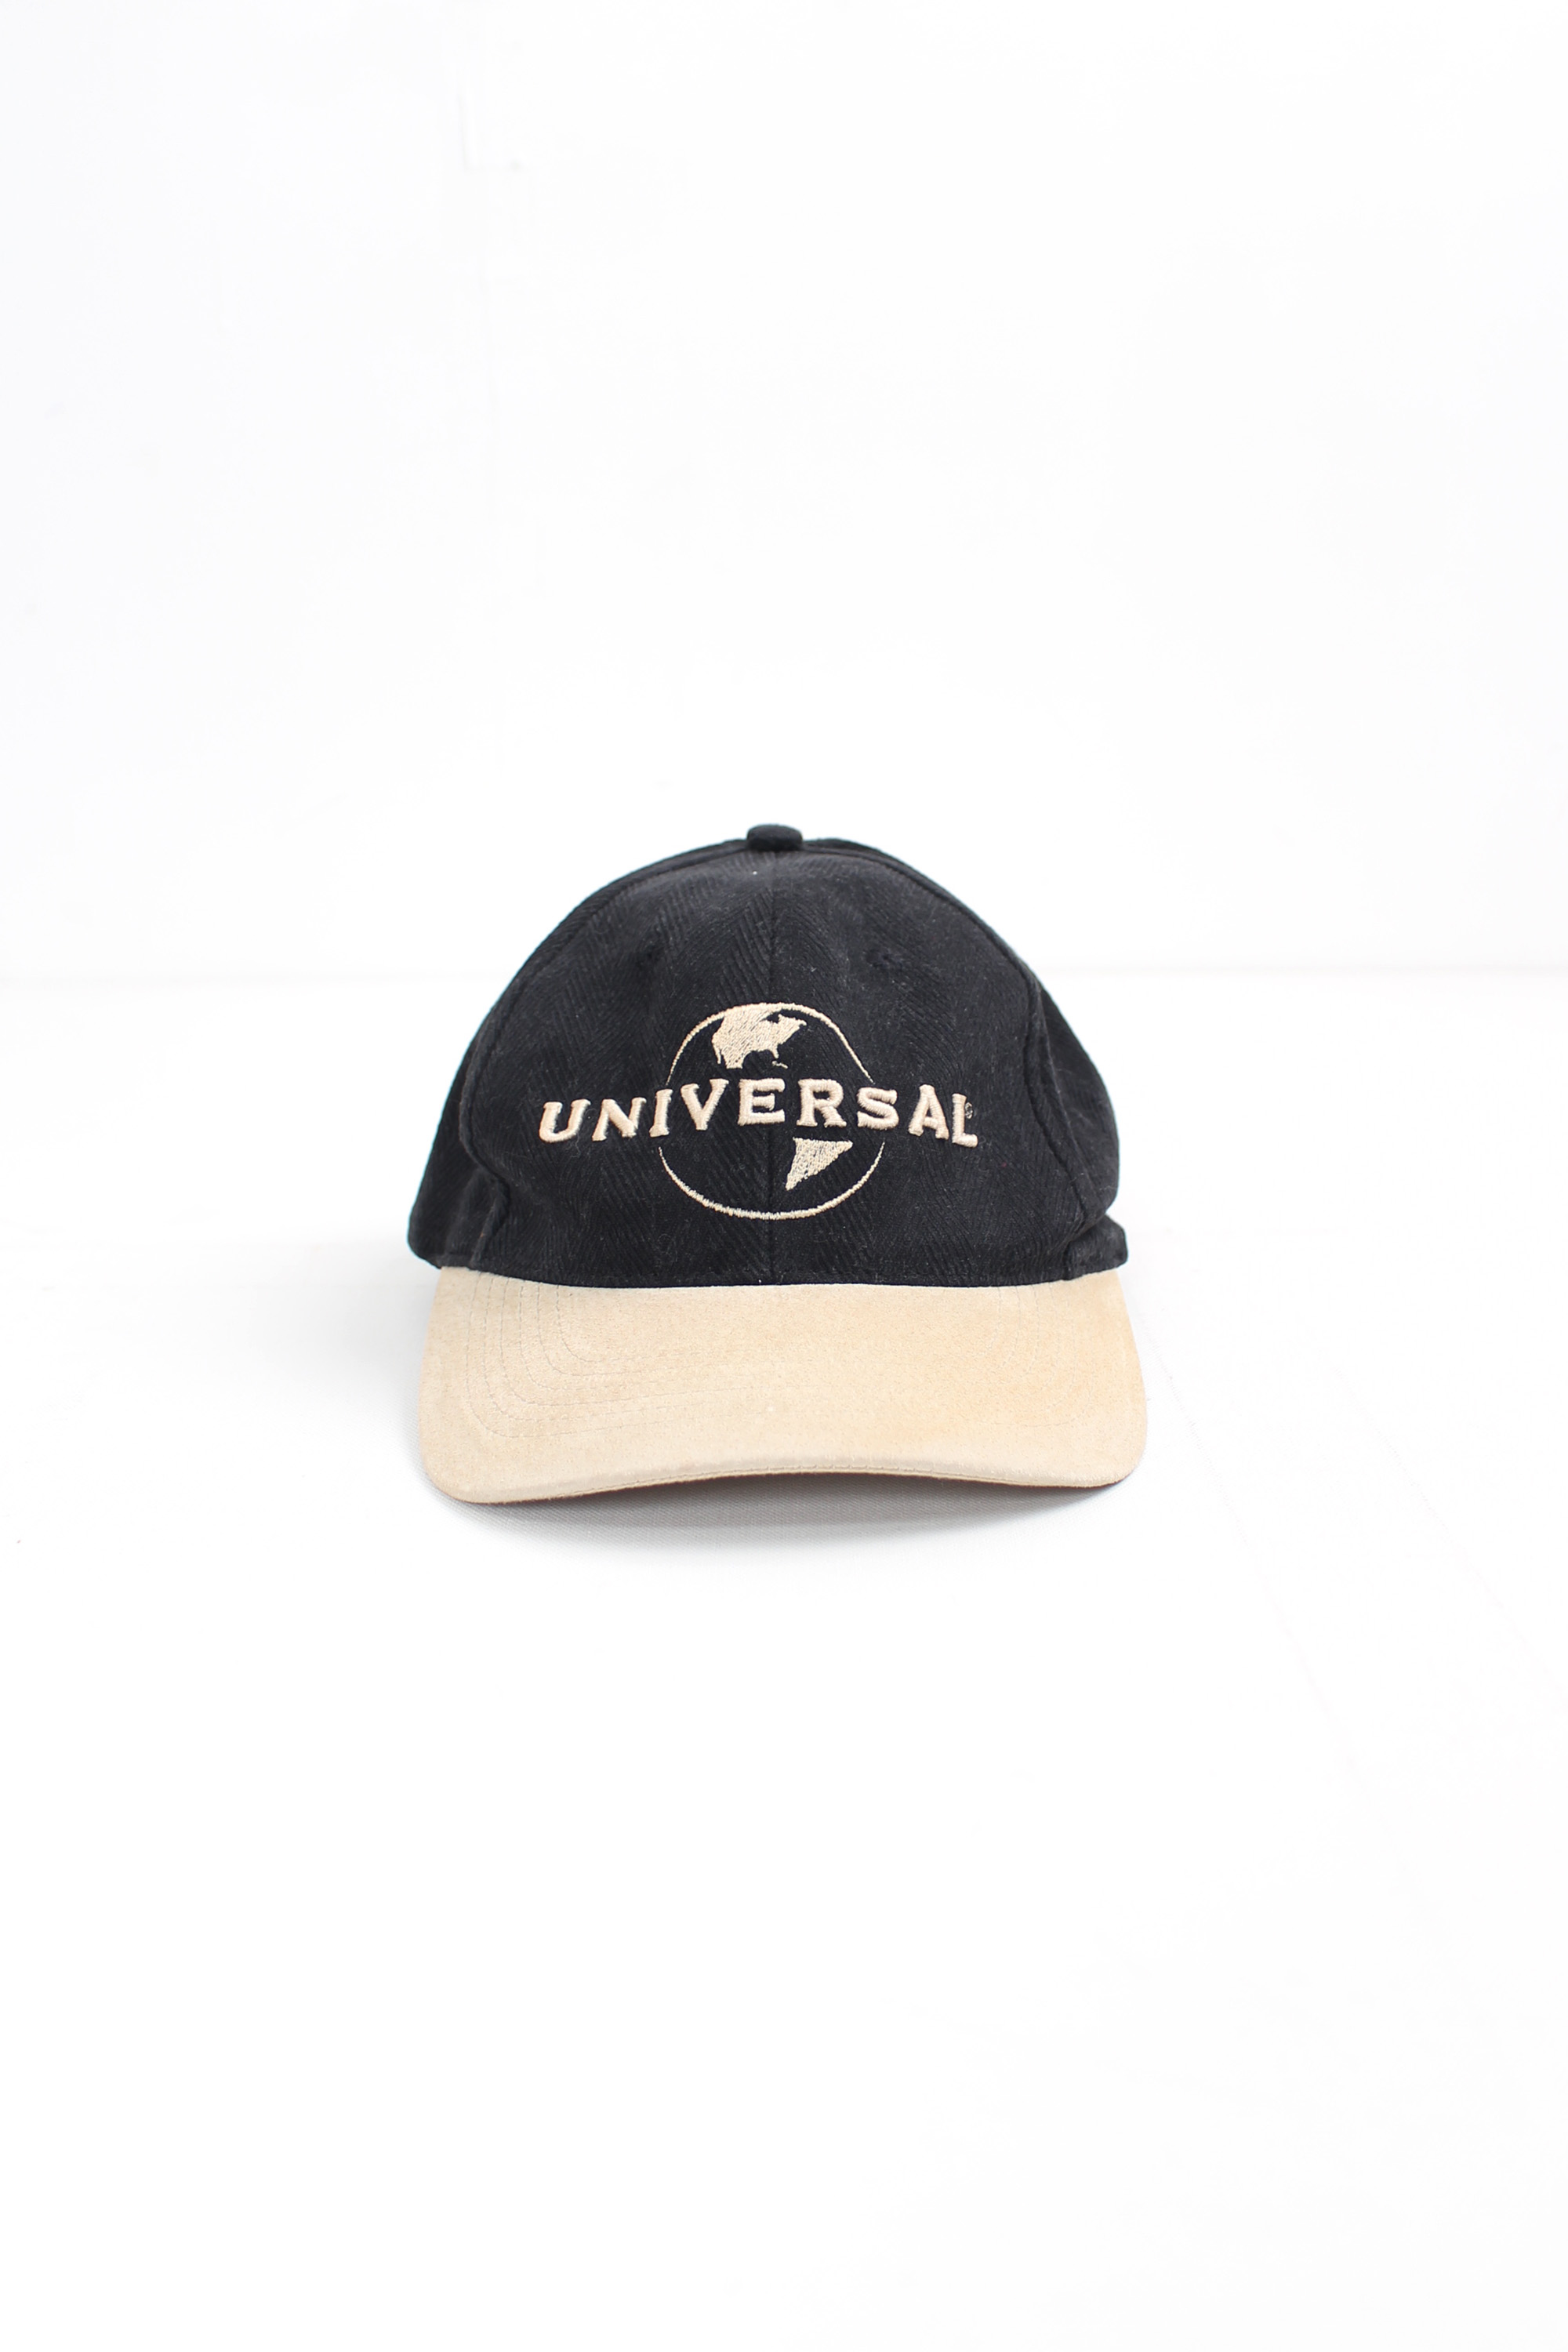 UNIVERSAL ball cap